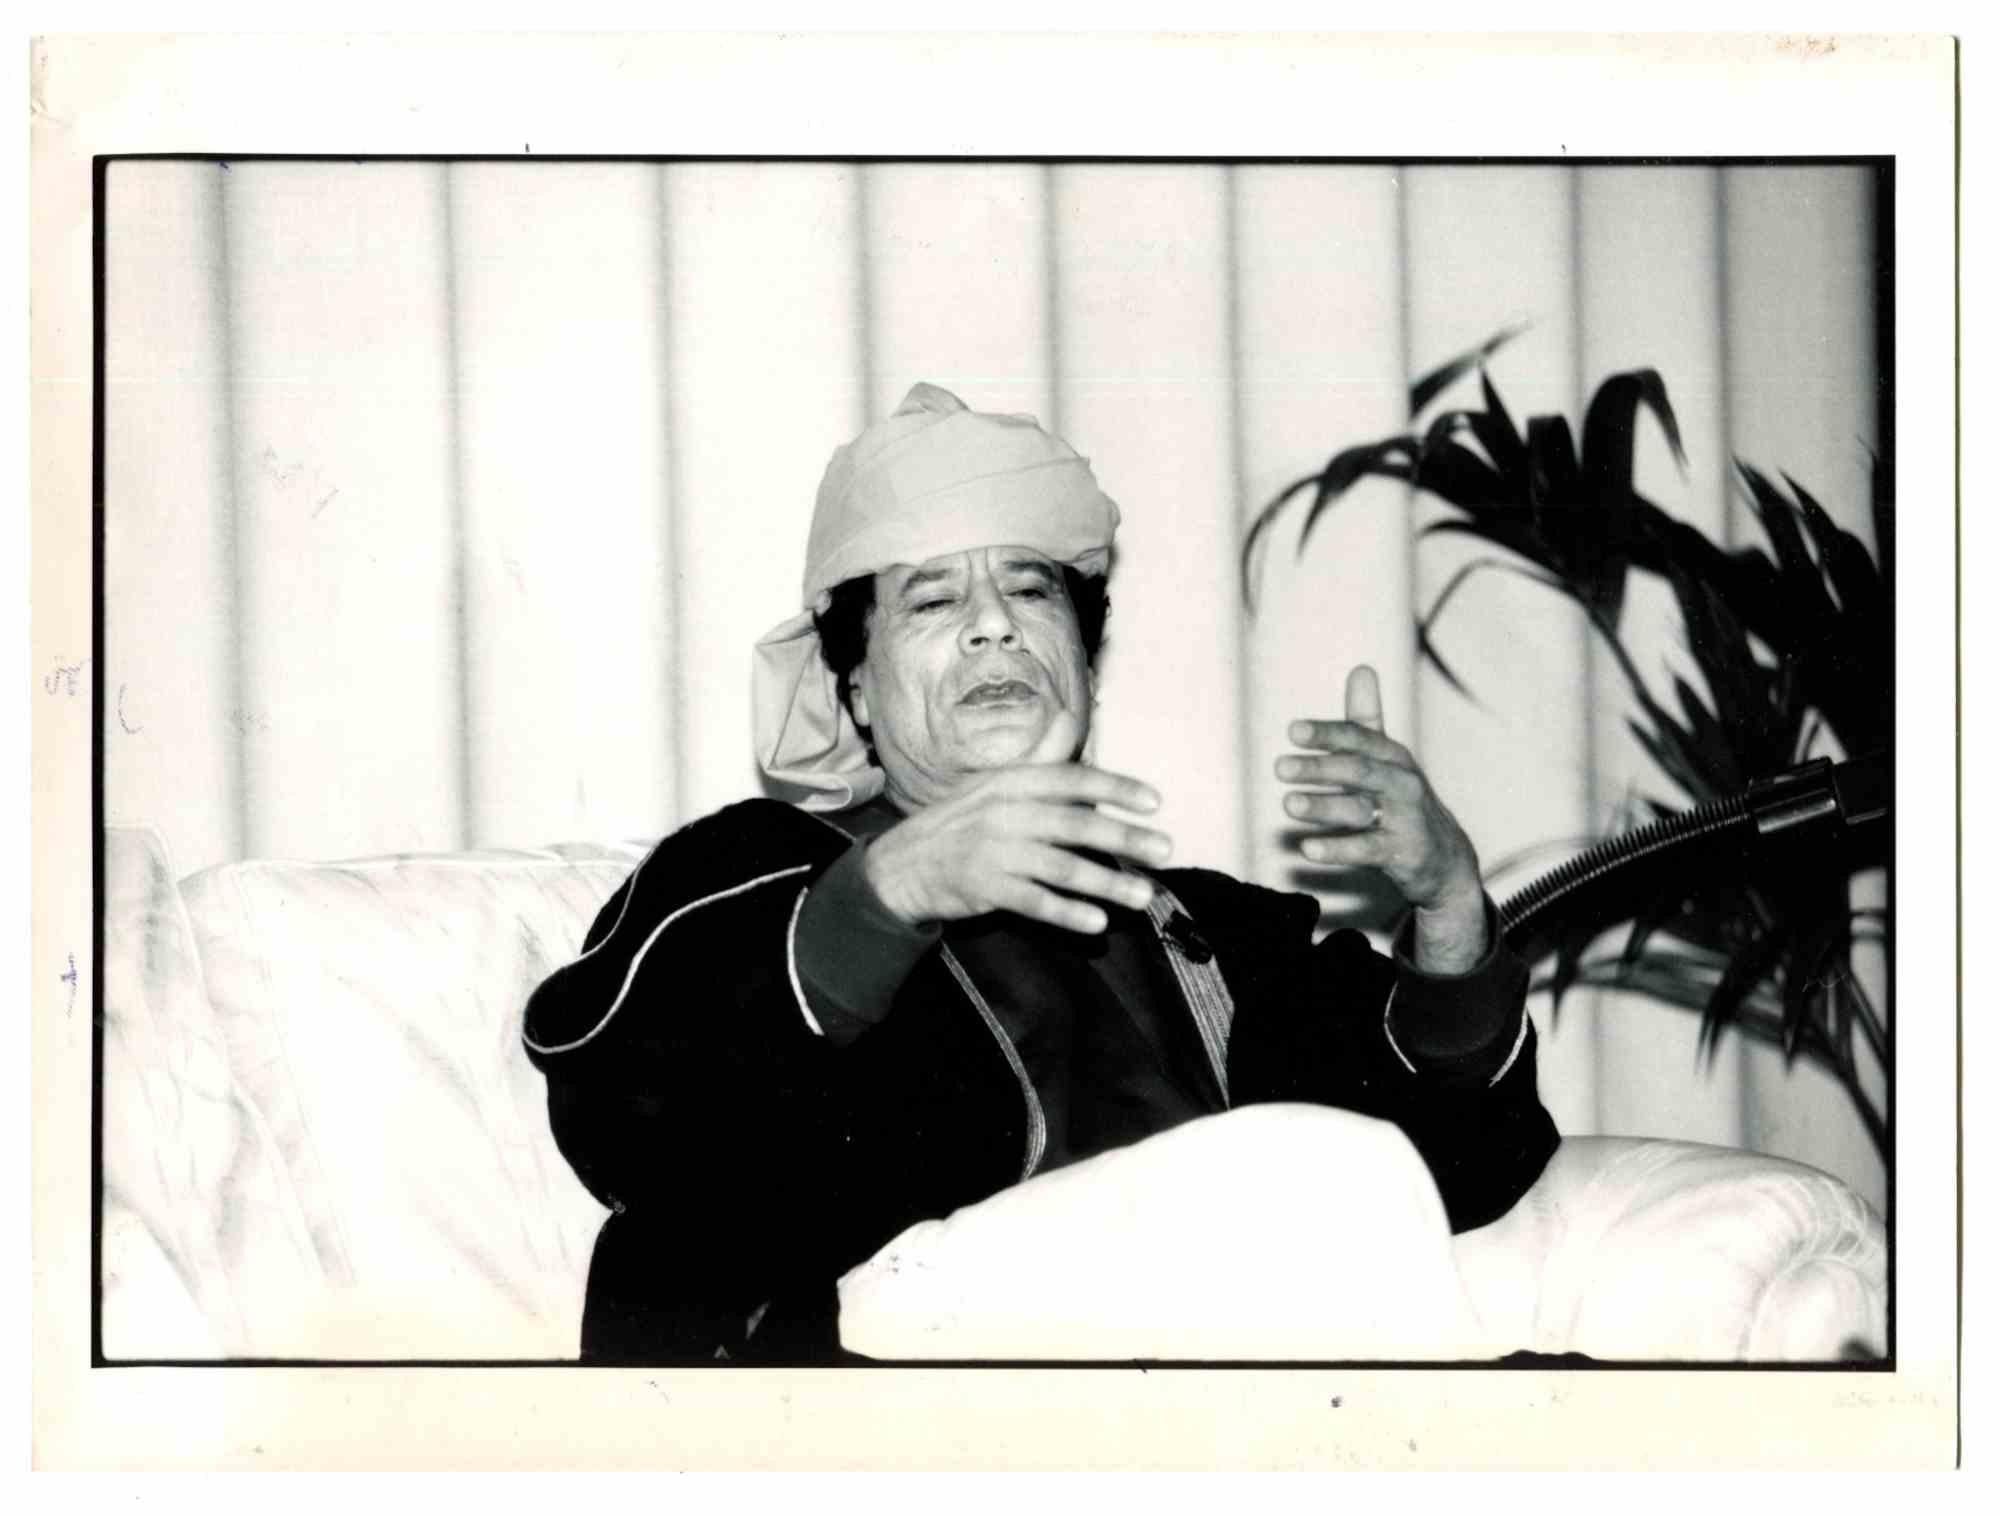 Unknown Portrait Photograph - Muammar Gaddafi - Vintage Photo - 1980s